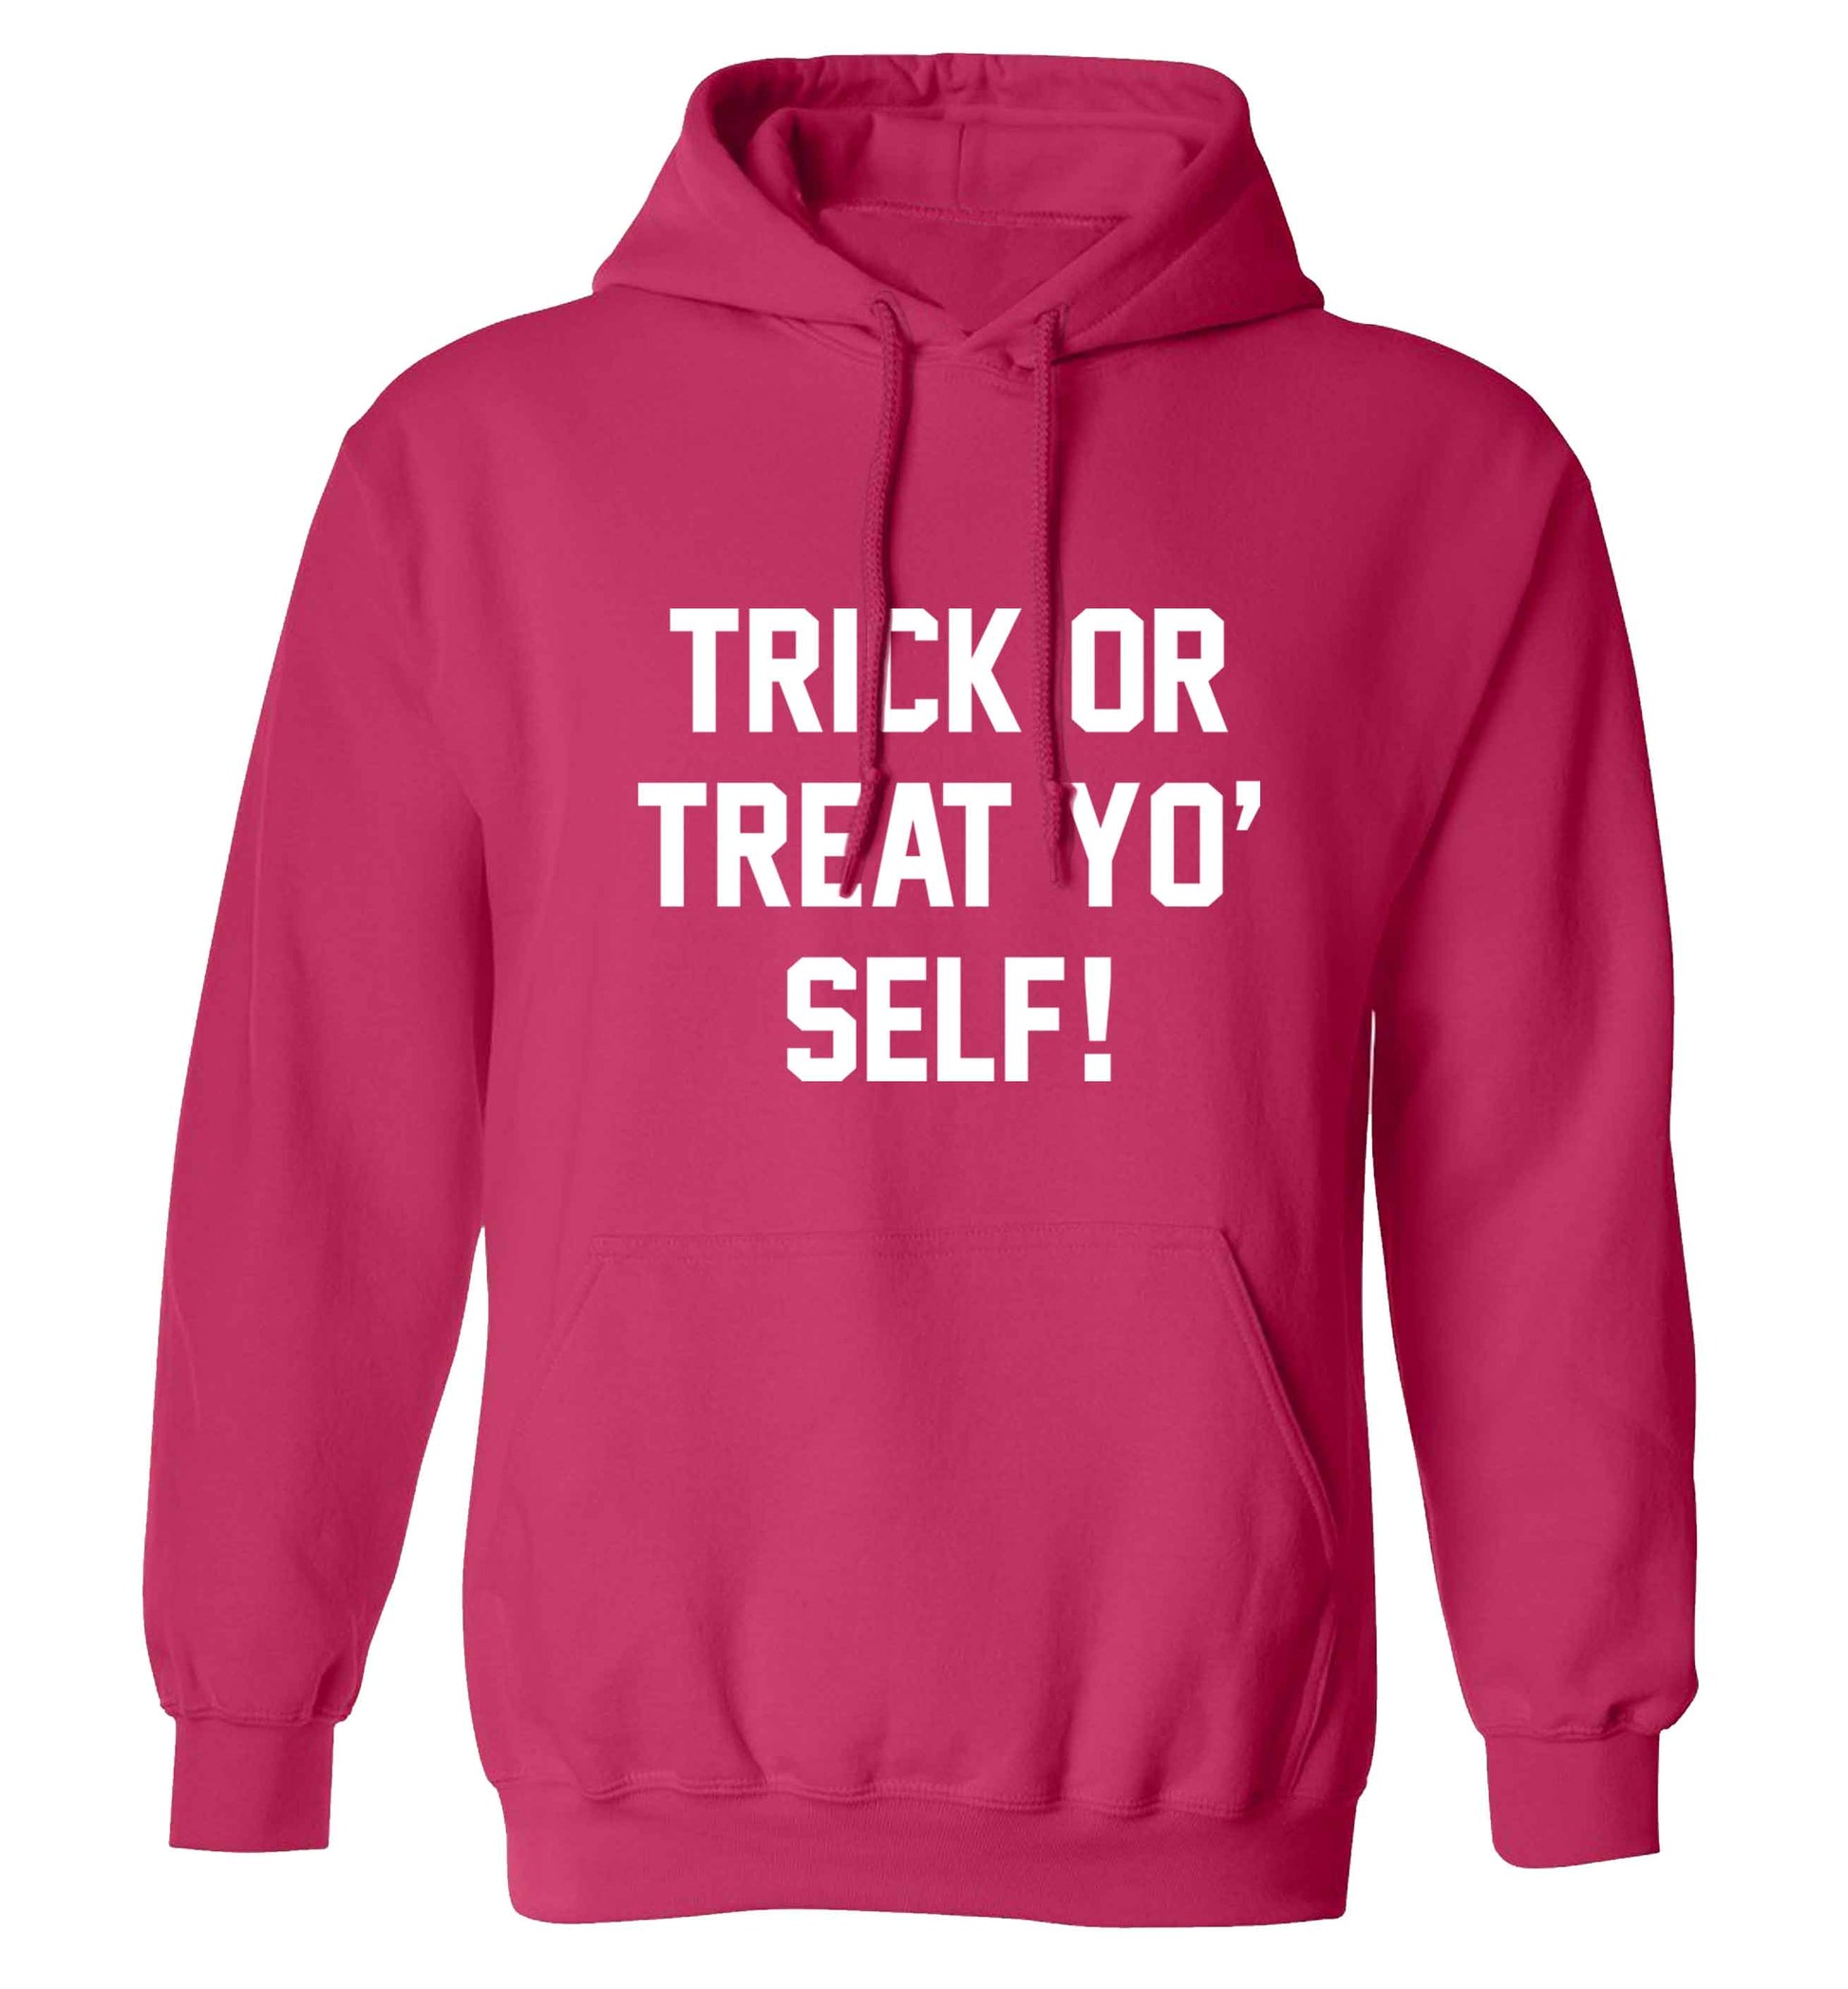 Trick or Treat Yo' Self adults unisex pink hoodie 2XL